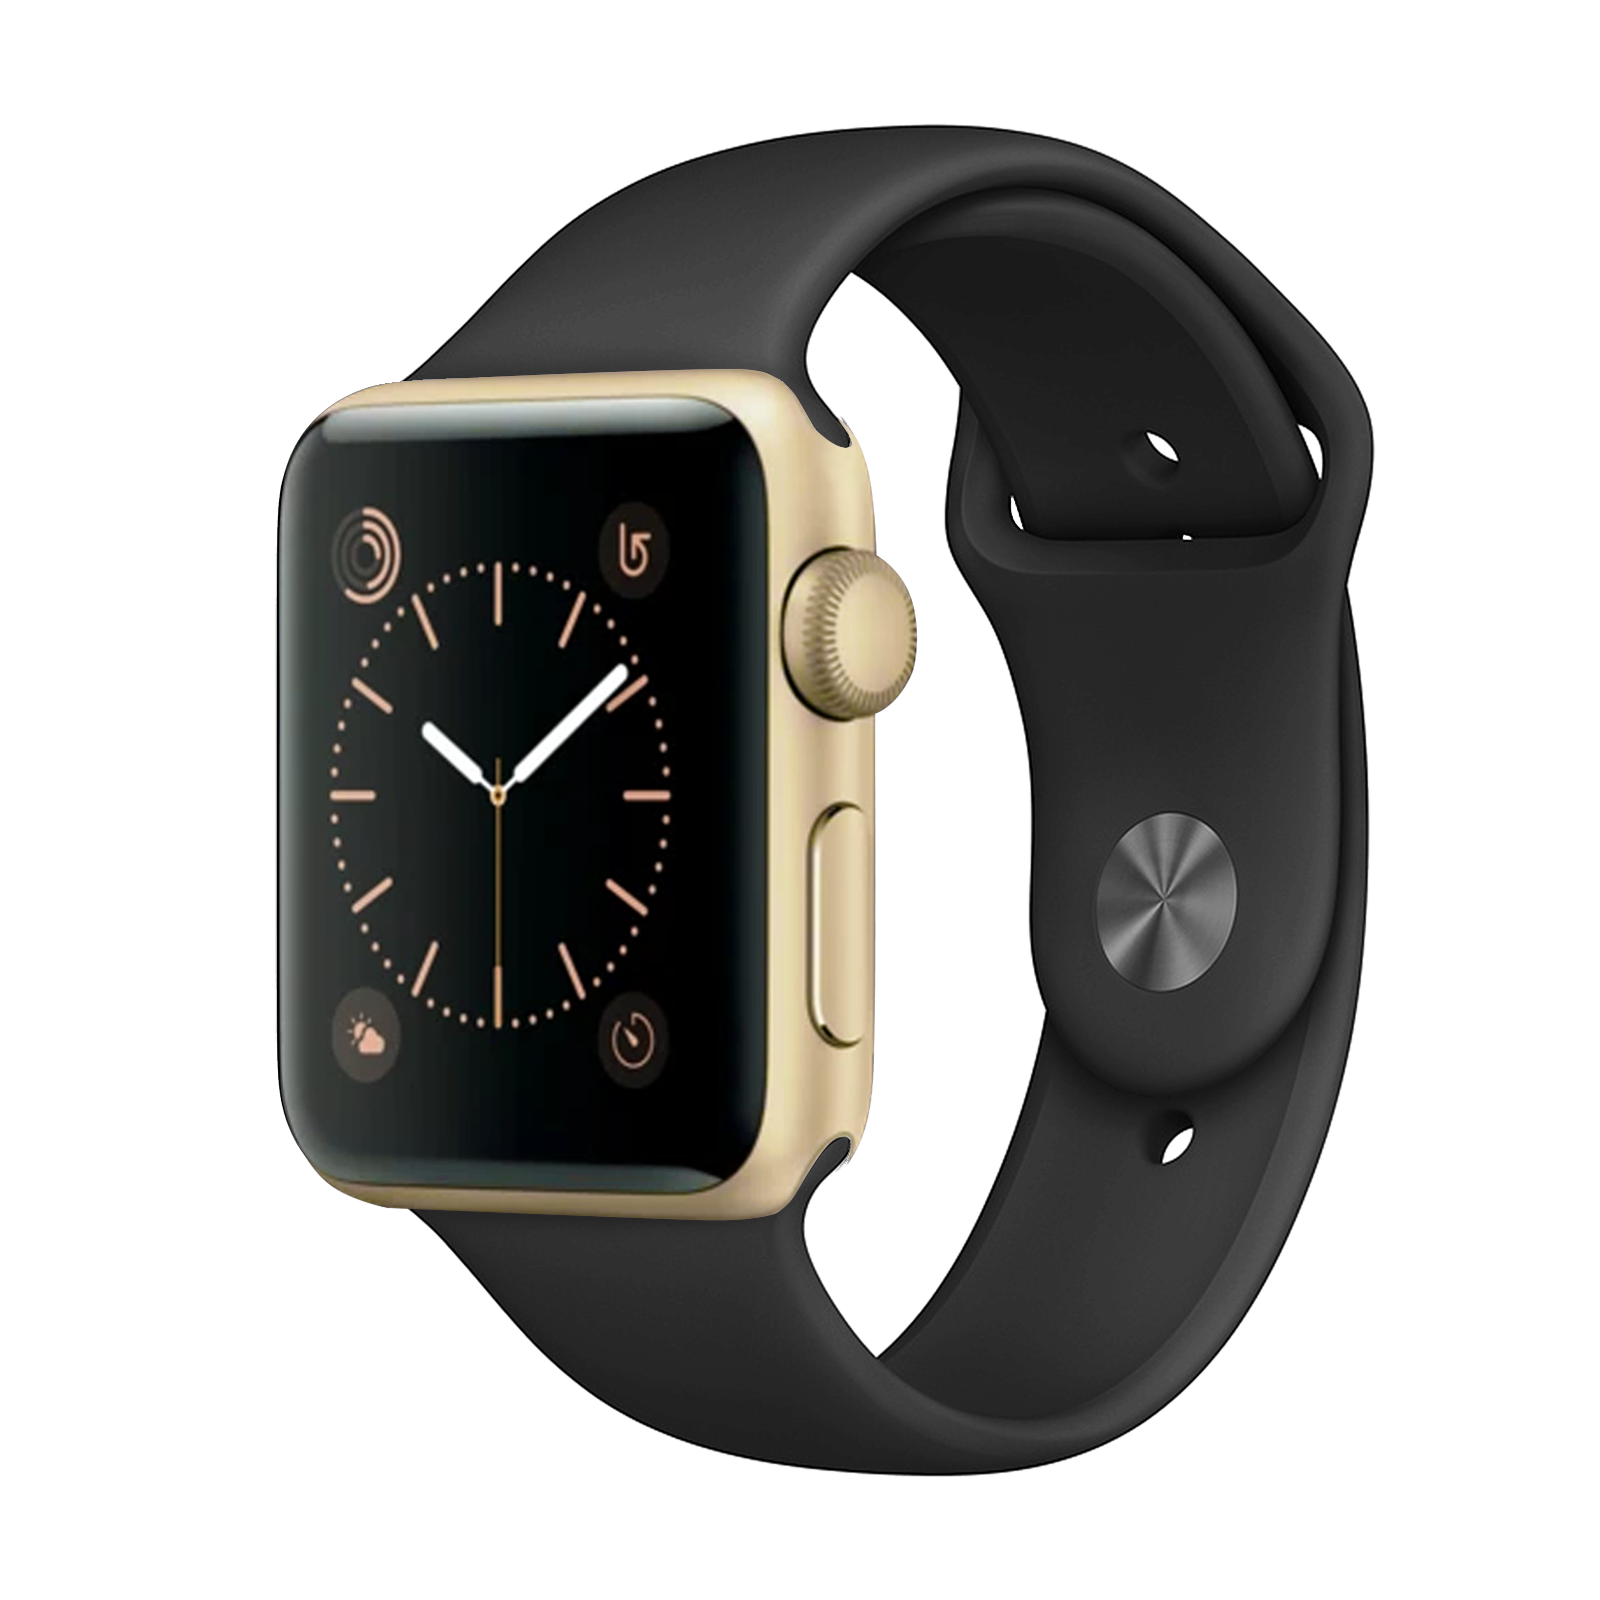 Apple Watch Series 2 Aluminum 38mm Gold Good - WiFi